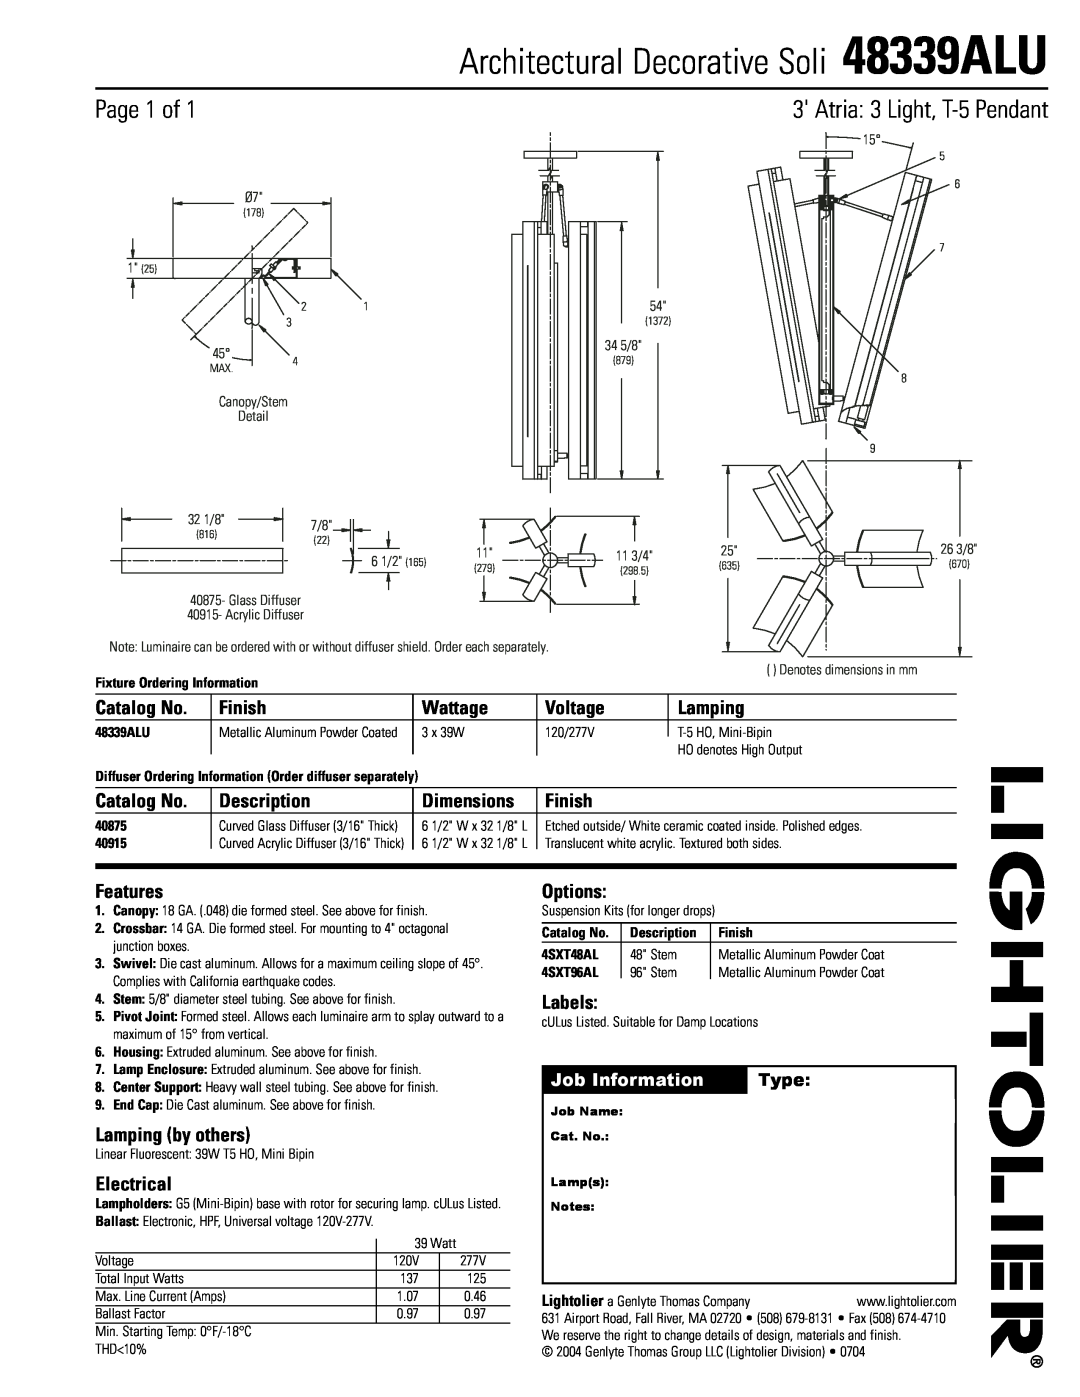 Lightolier dimensions Architectural Decorative Soli 48339ALU, Page 1 of, Atria 3 Light, T-5Pendant 